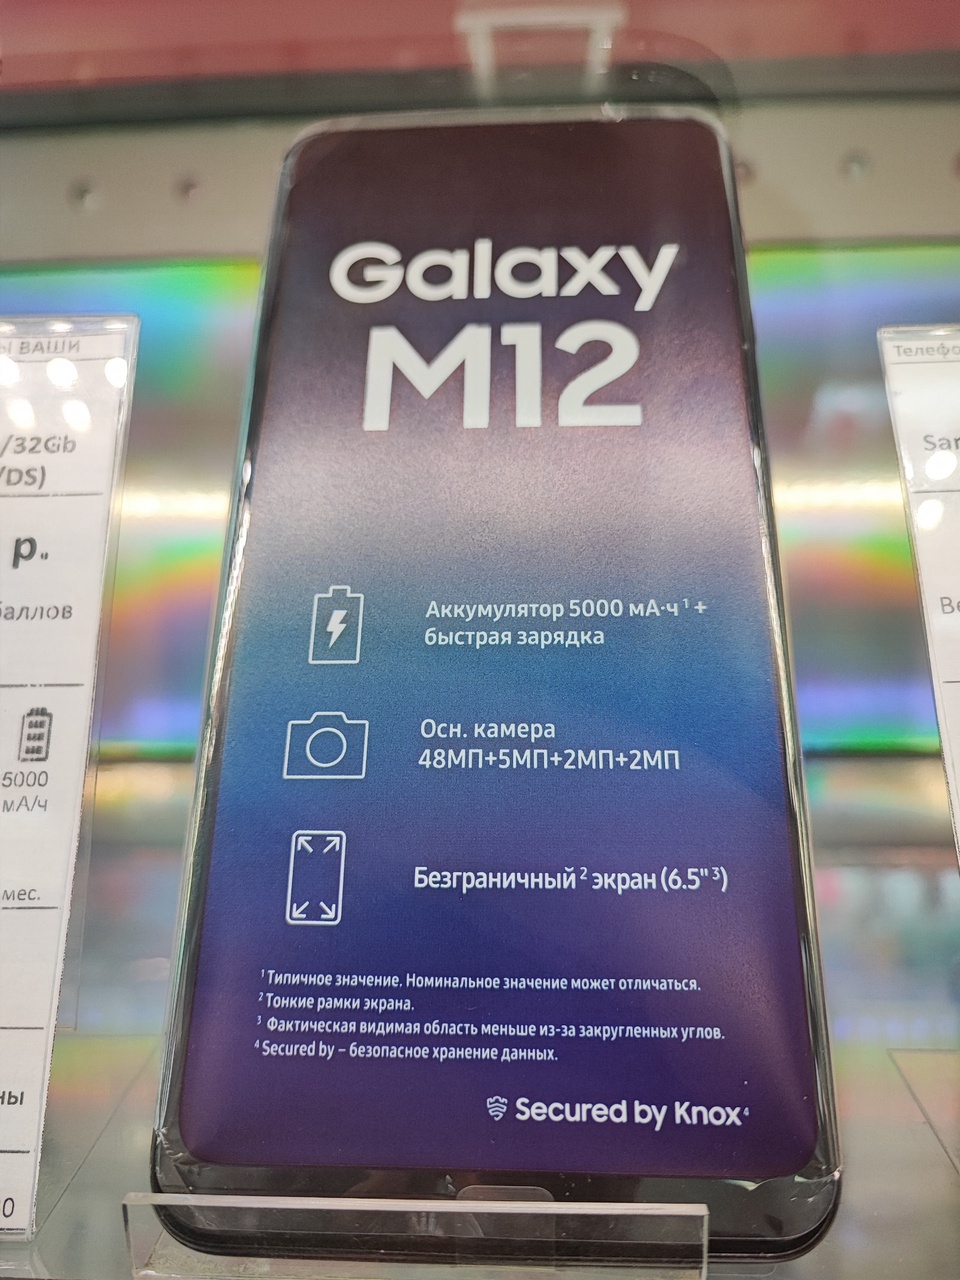 Samsung M12 32 gb - 13 990 ₽, заказать онлайн.